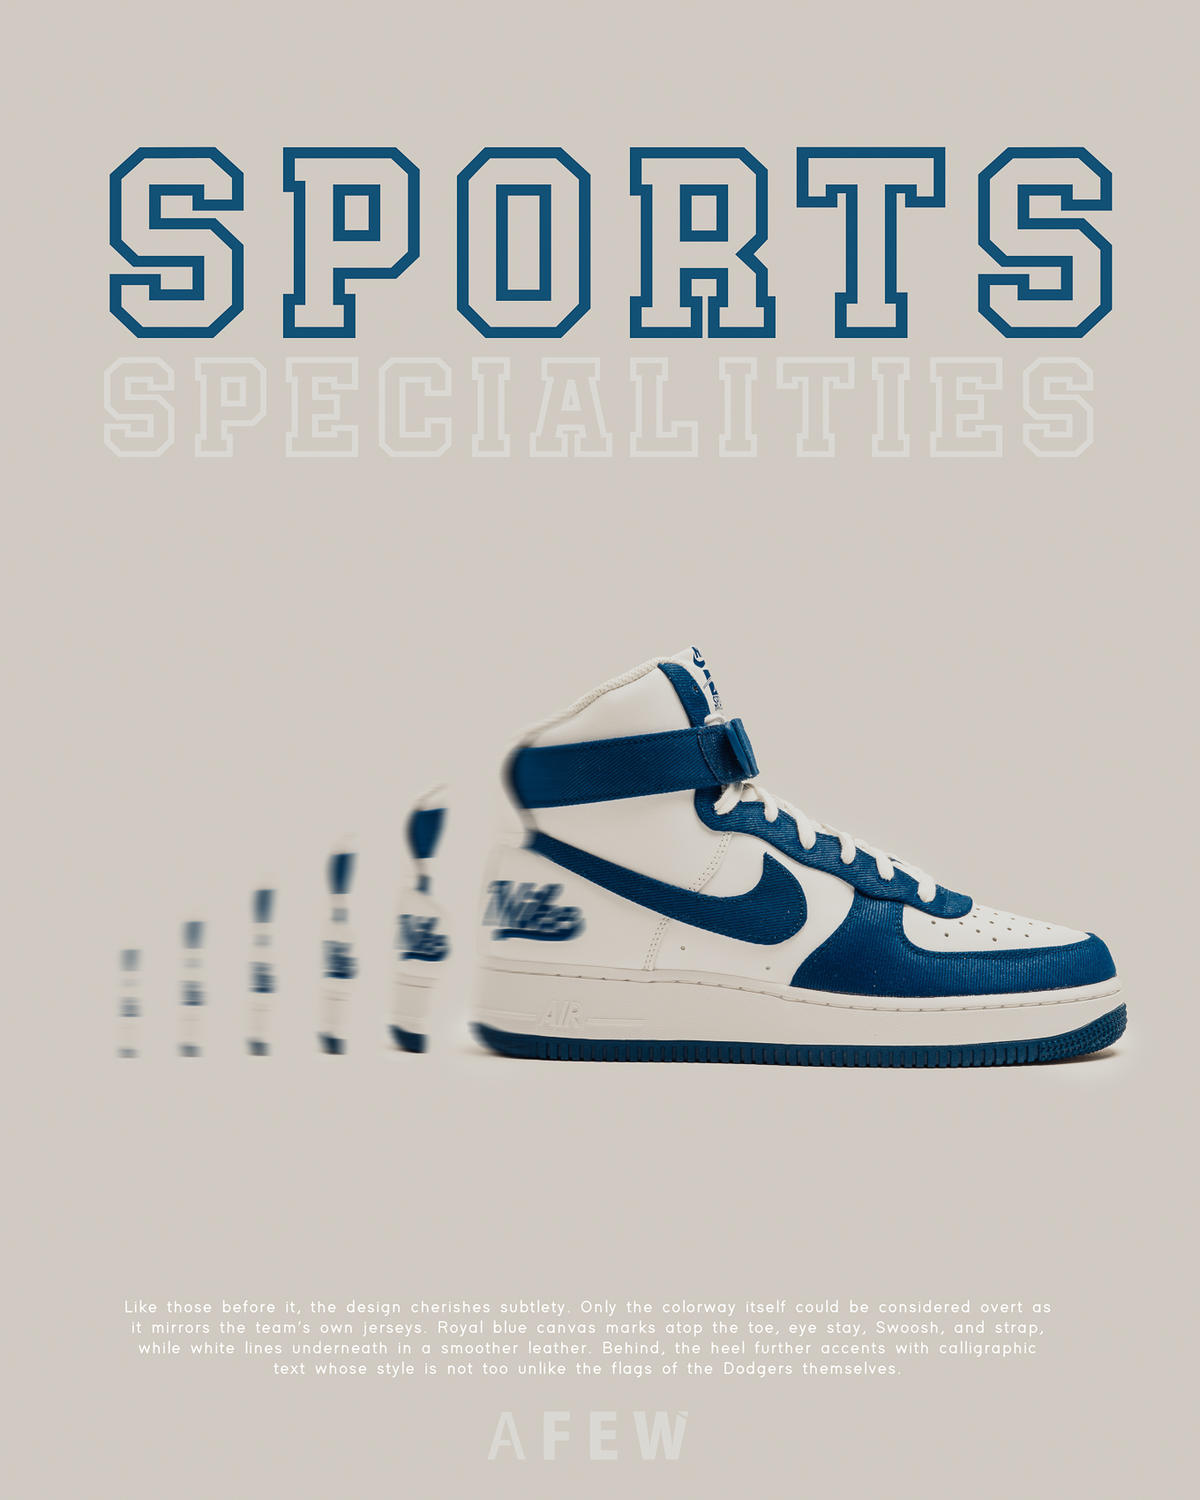 Nike Air Force 1 High '07 Emb White / Blue Rush High Top Sneakers - Sneak  in Peace